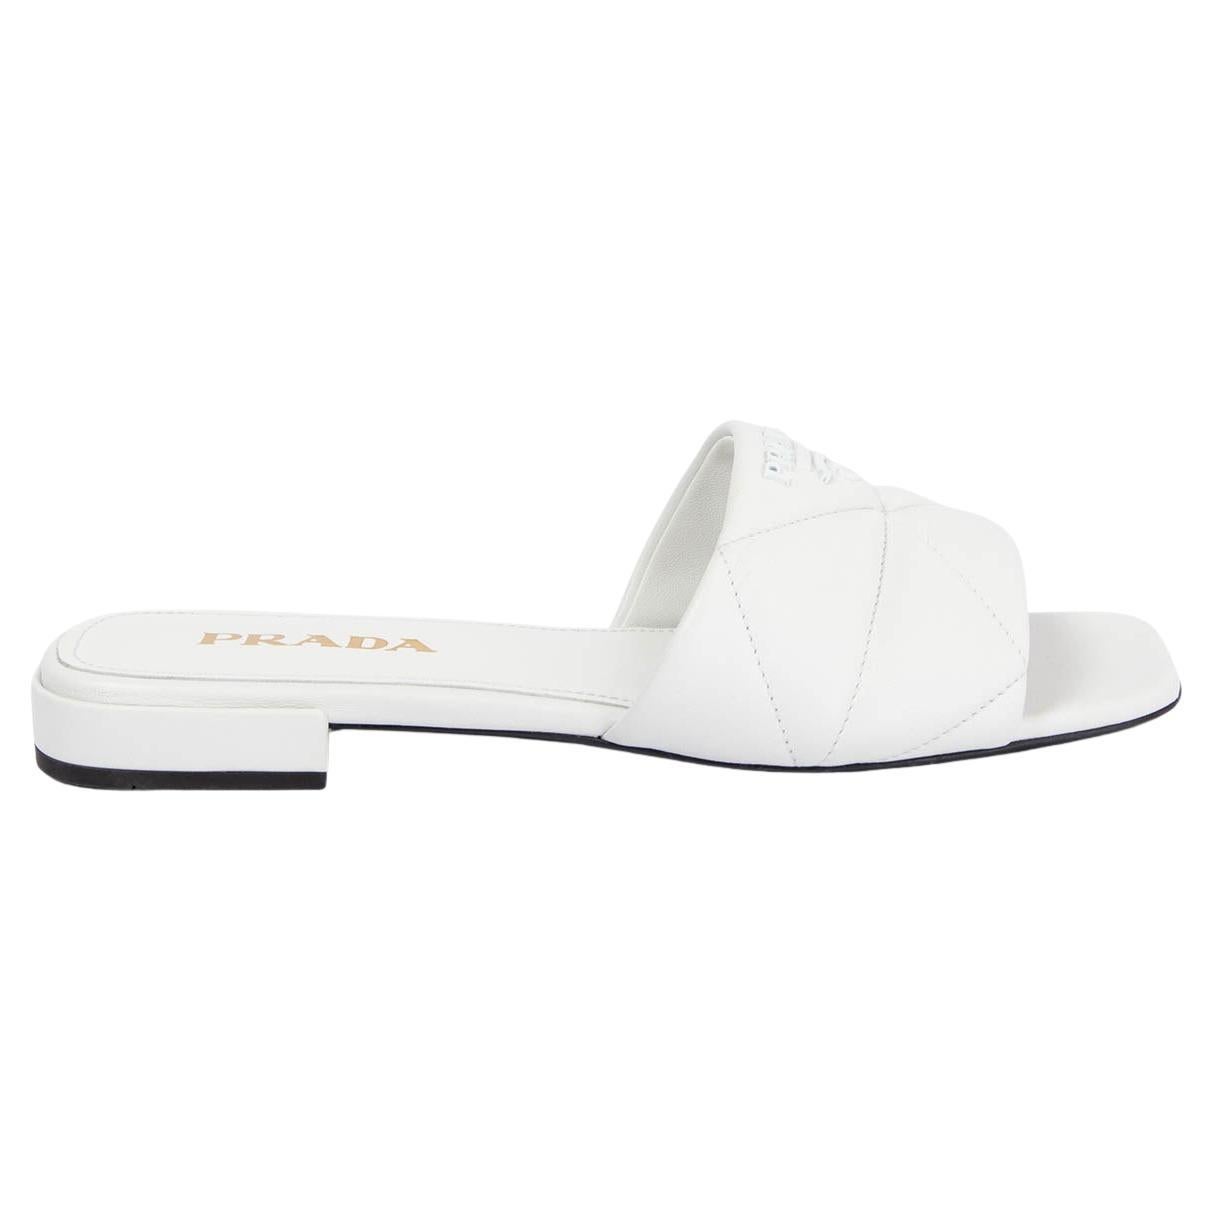 PRADA cuir blanc QUILTED SABOTS Slide Shoes 39.5